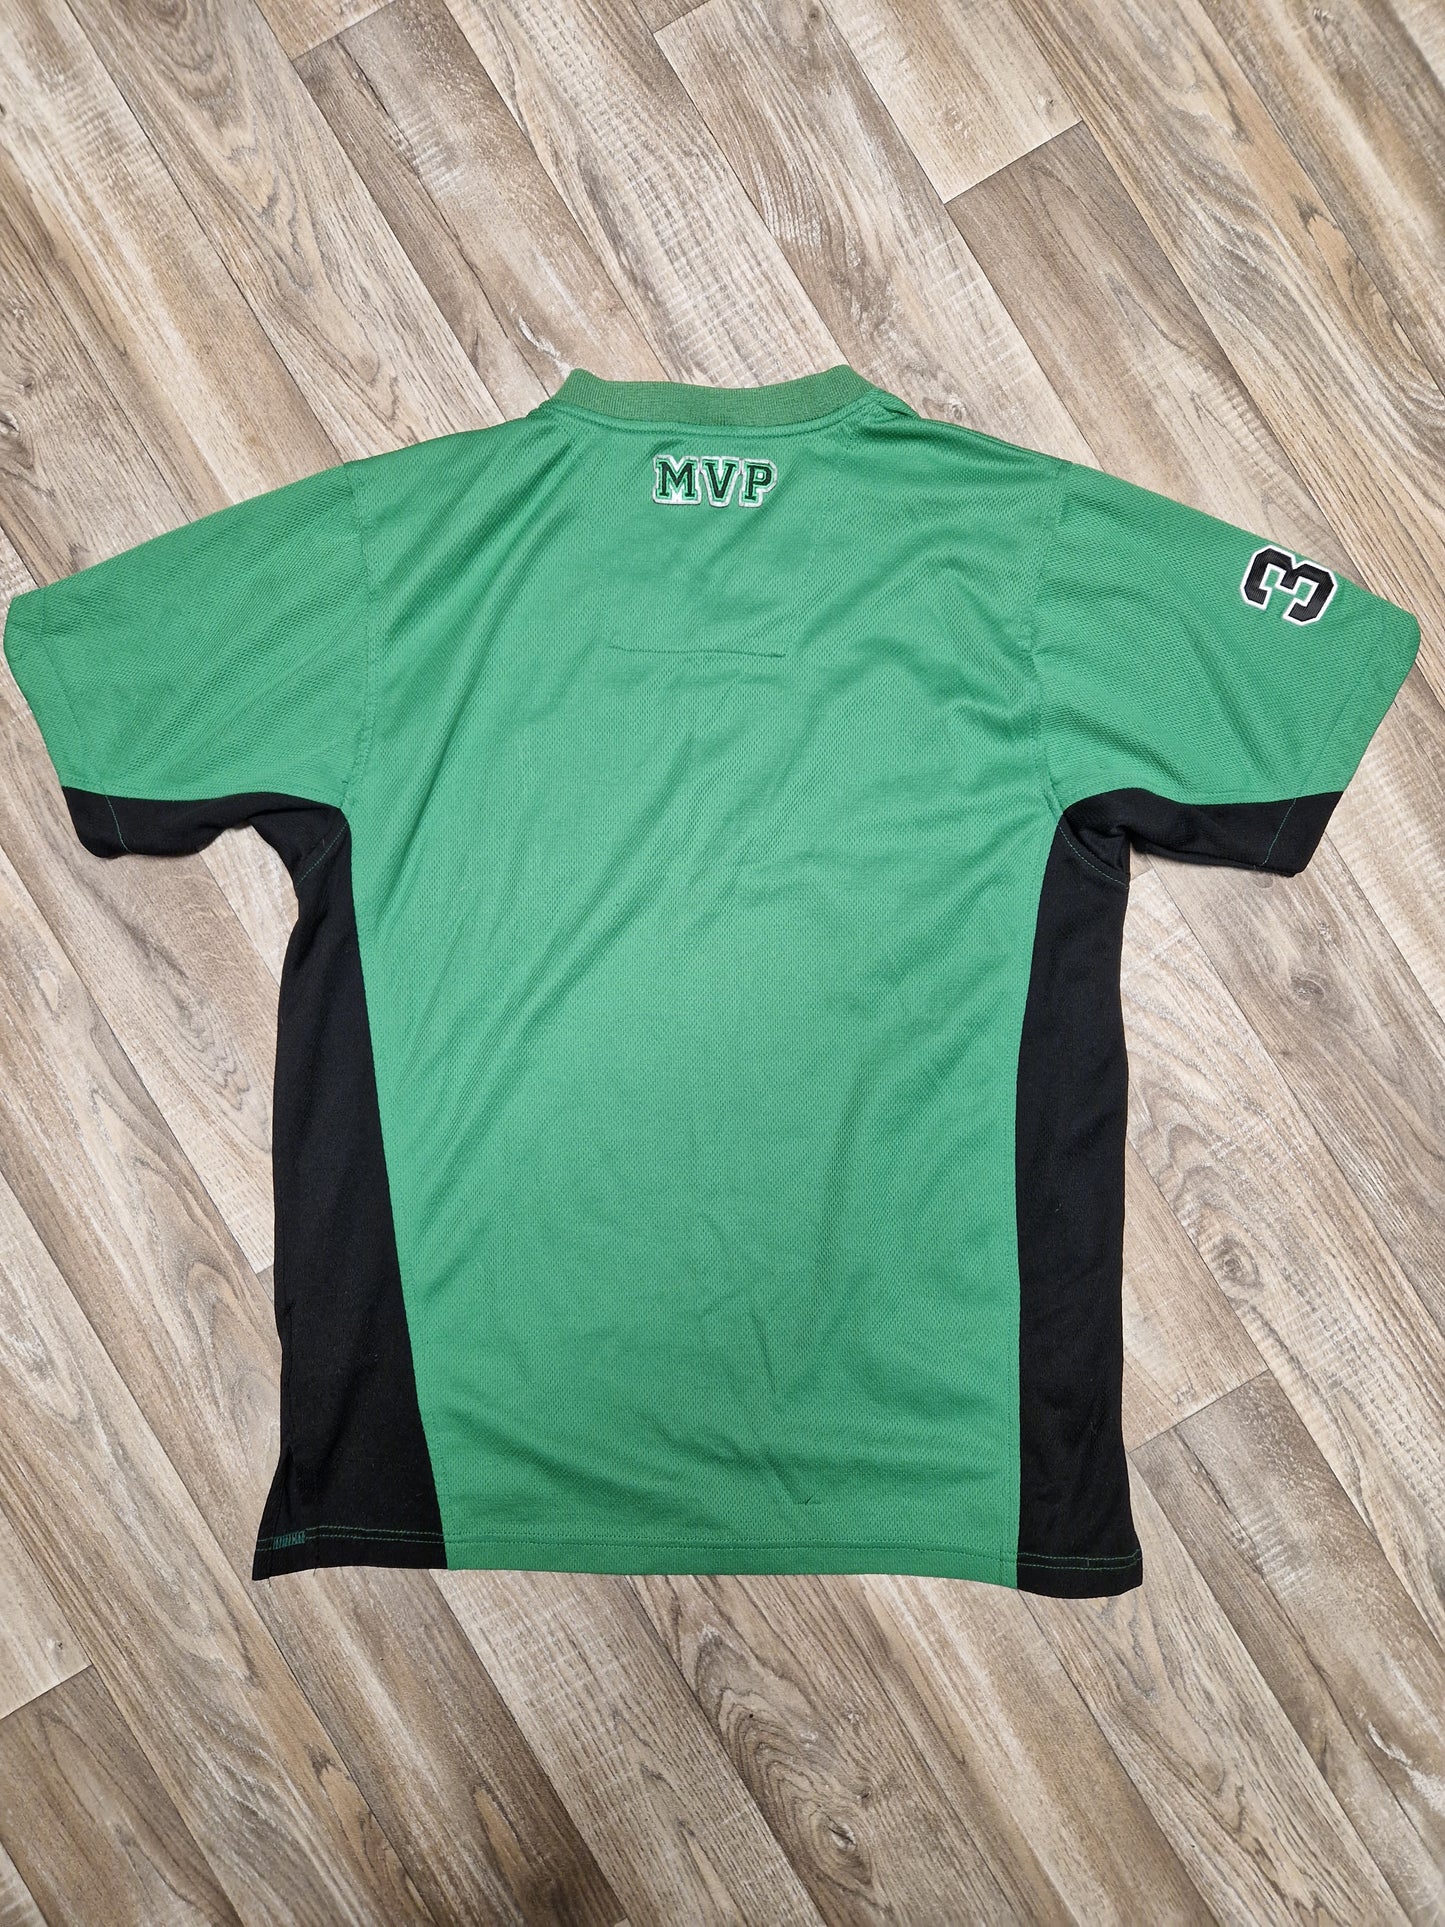 Paul Pierce Boston Celtics Warm Up T-Shirt Size Medium